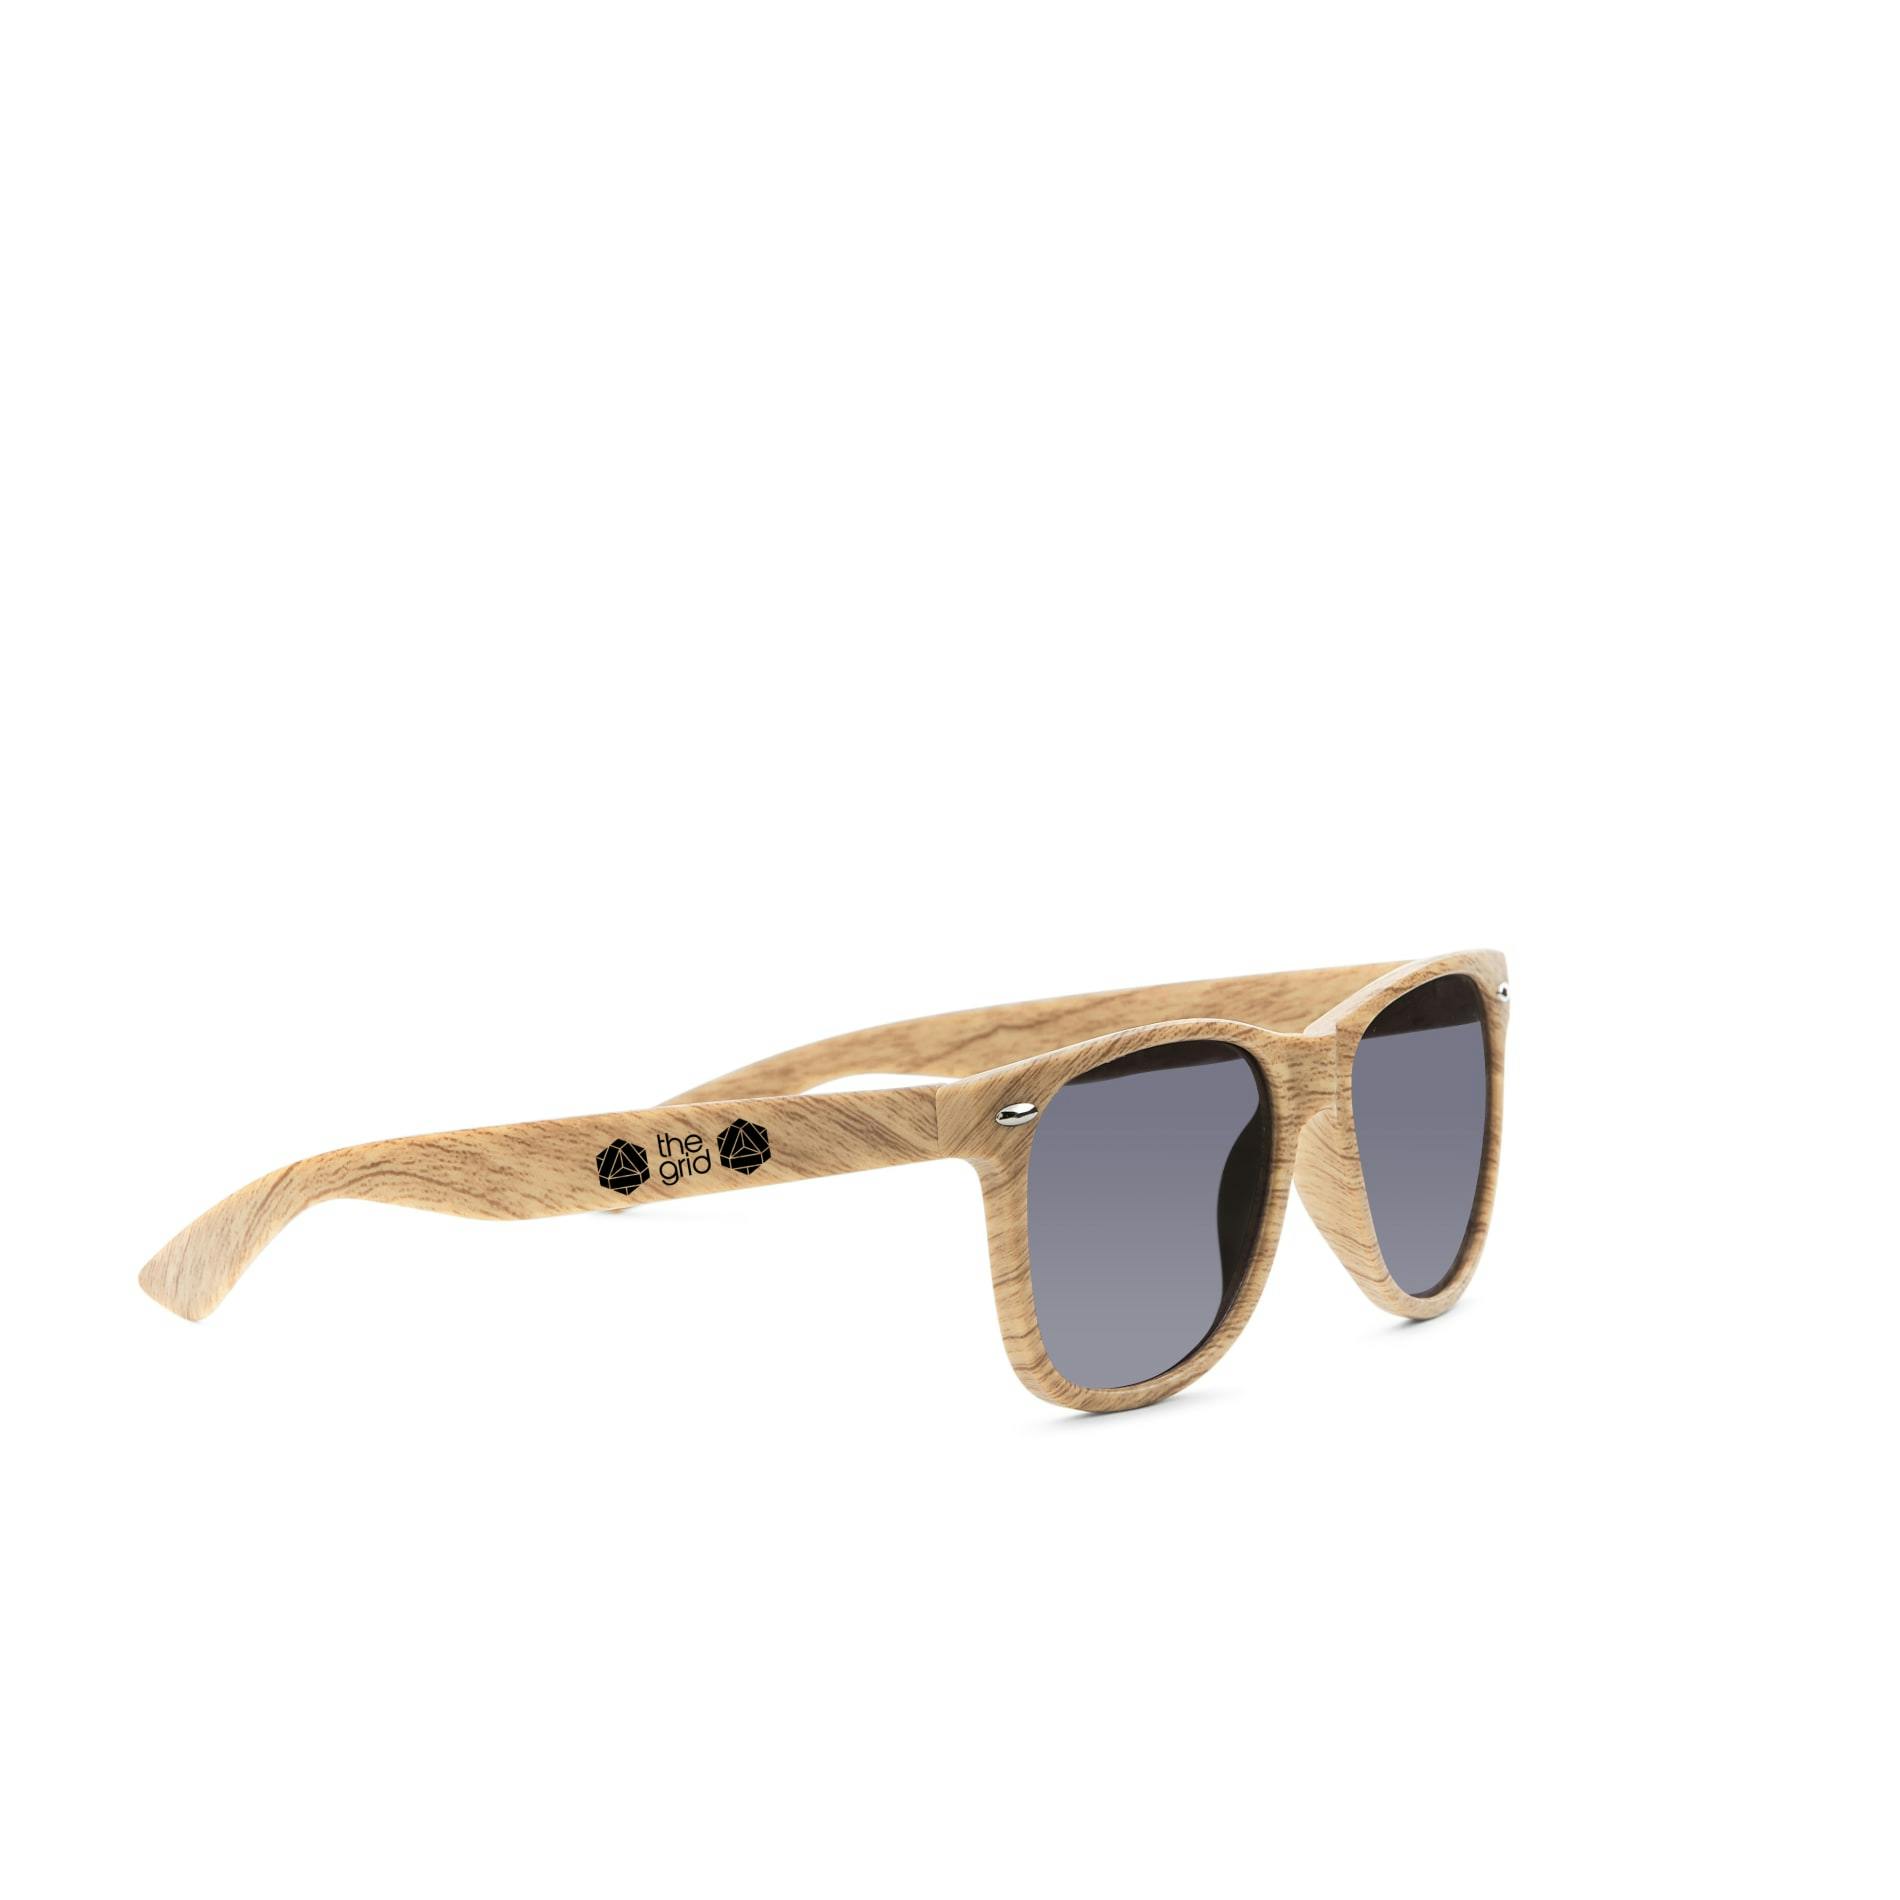 Allen Sunglasses - additional Image 1